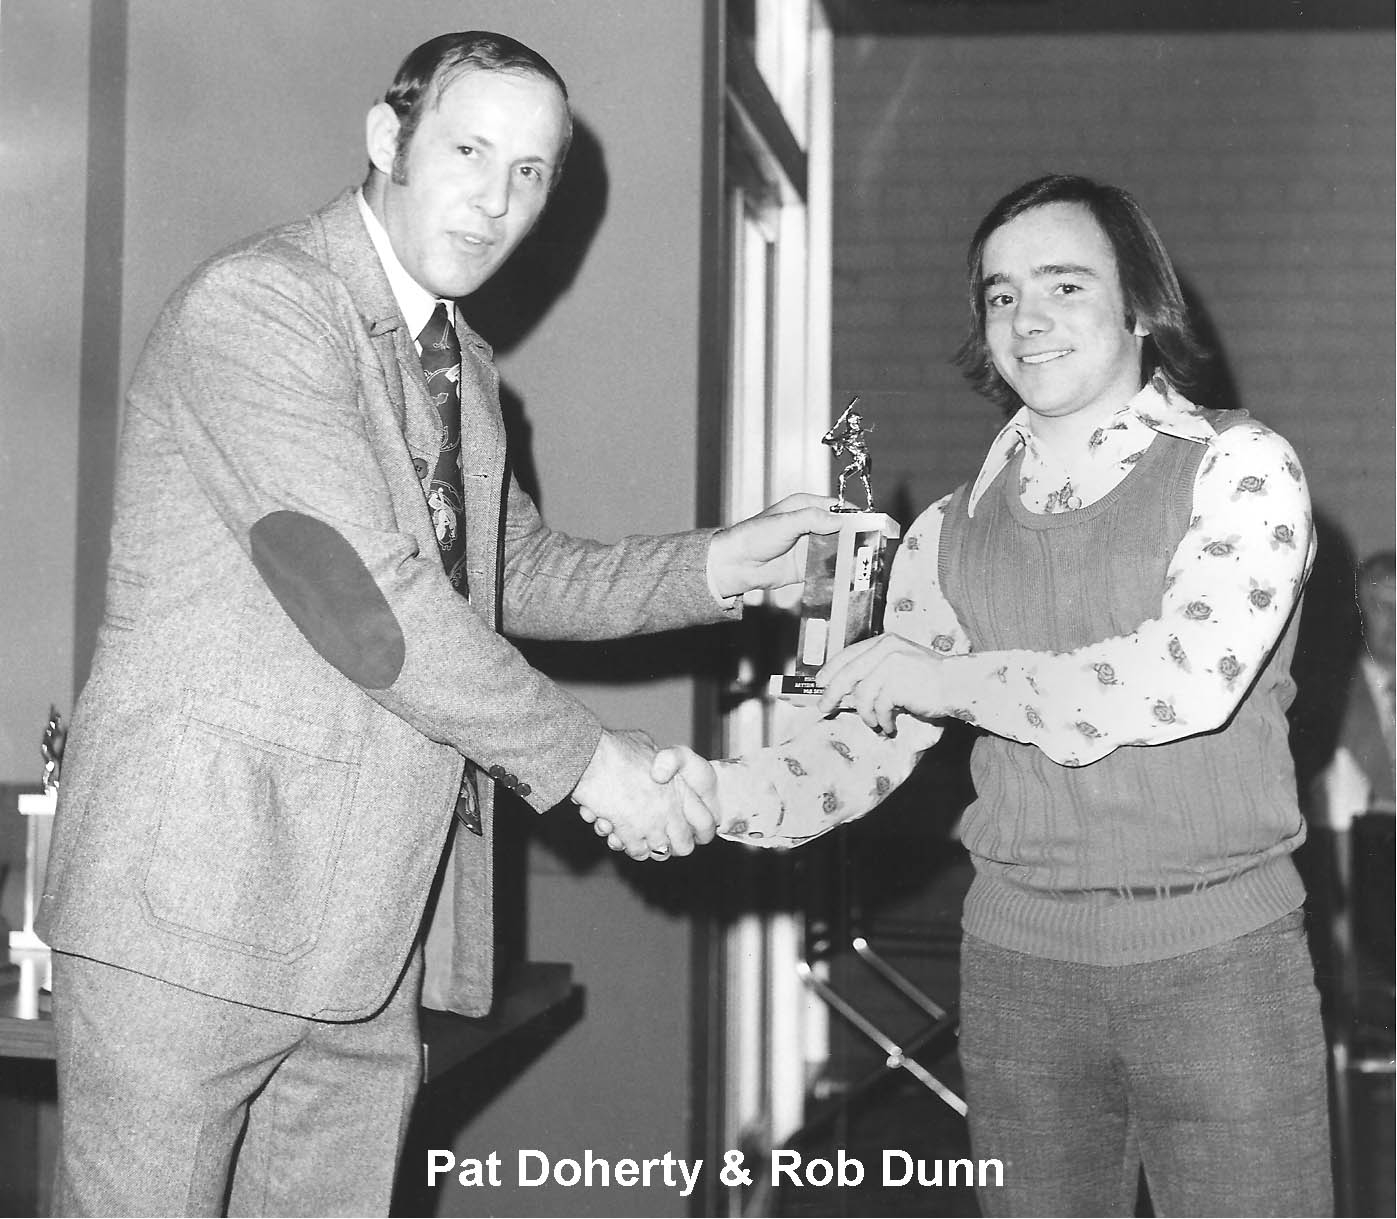 Pat Doherty & Rob Dunn